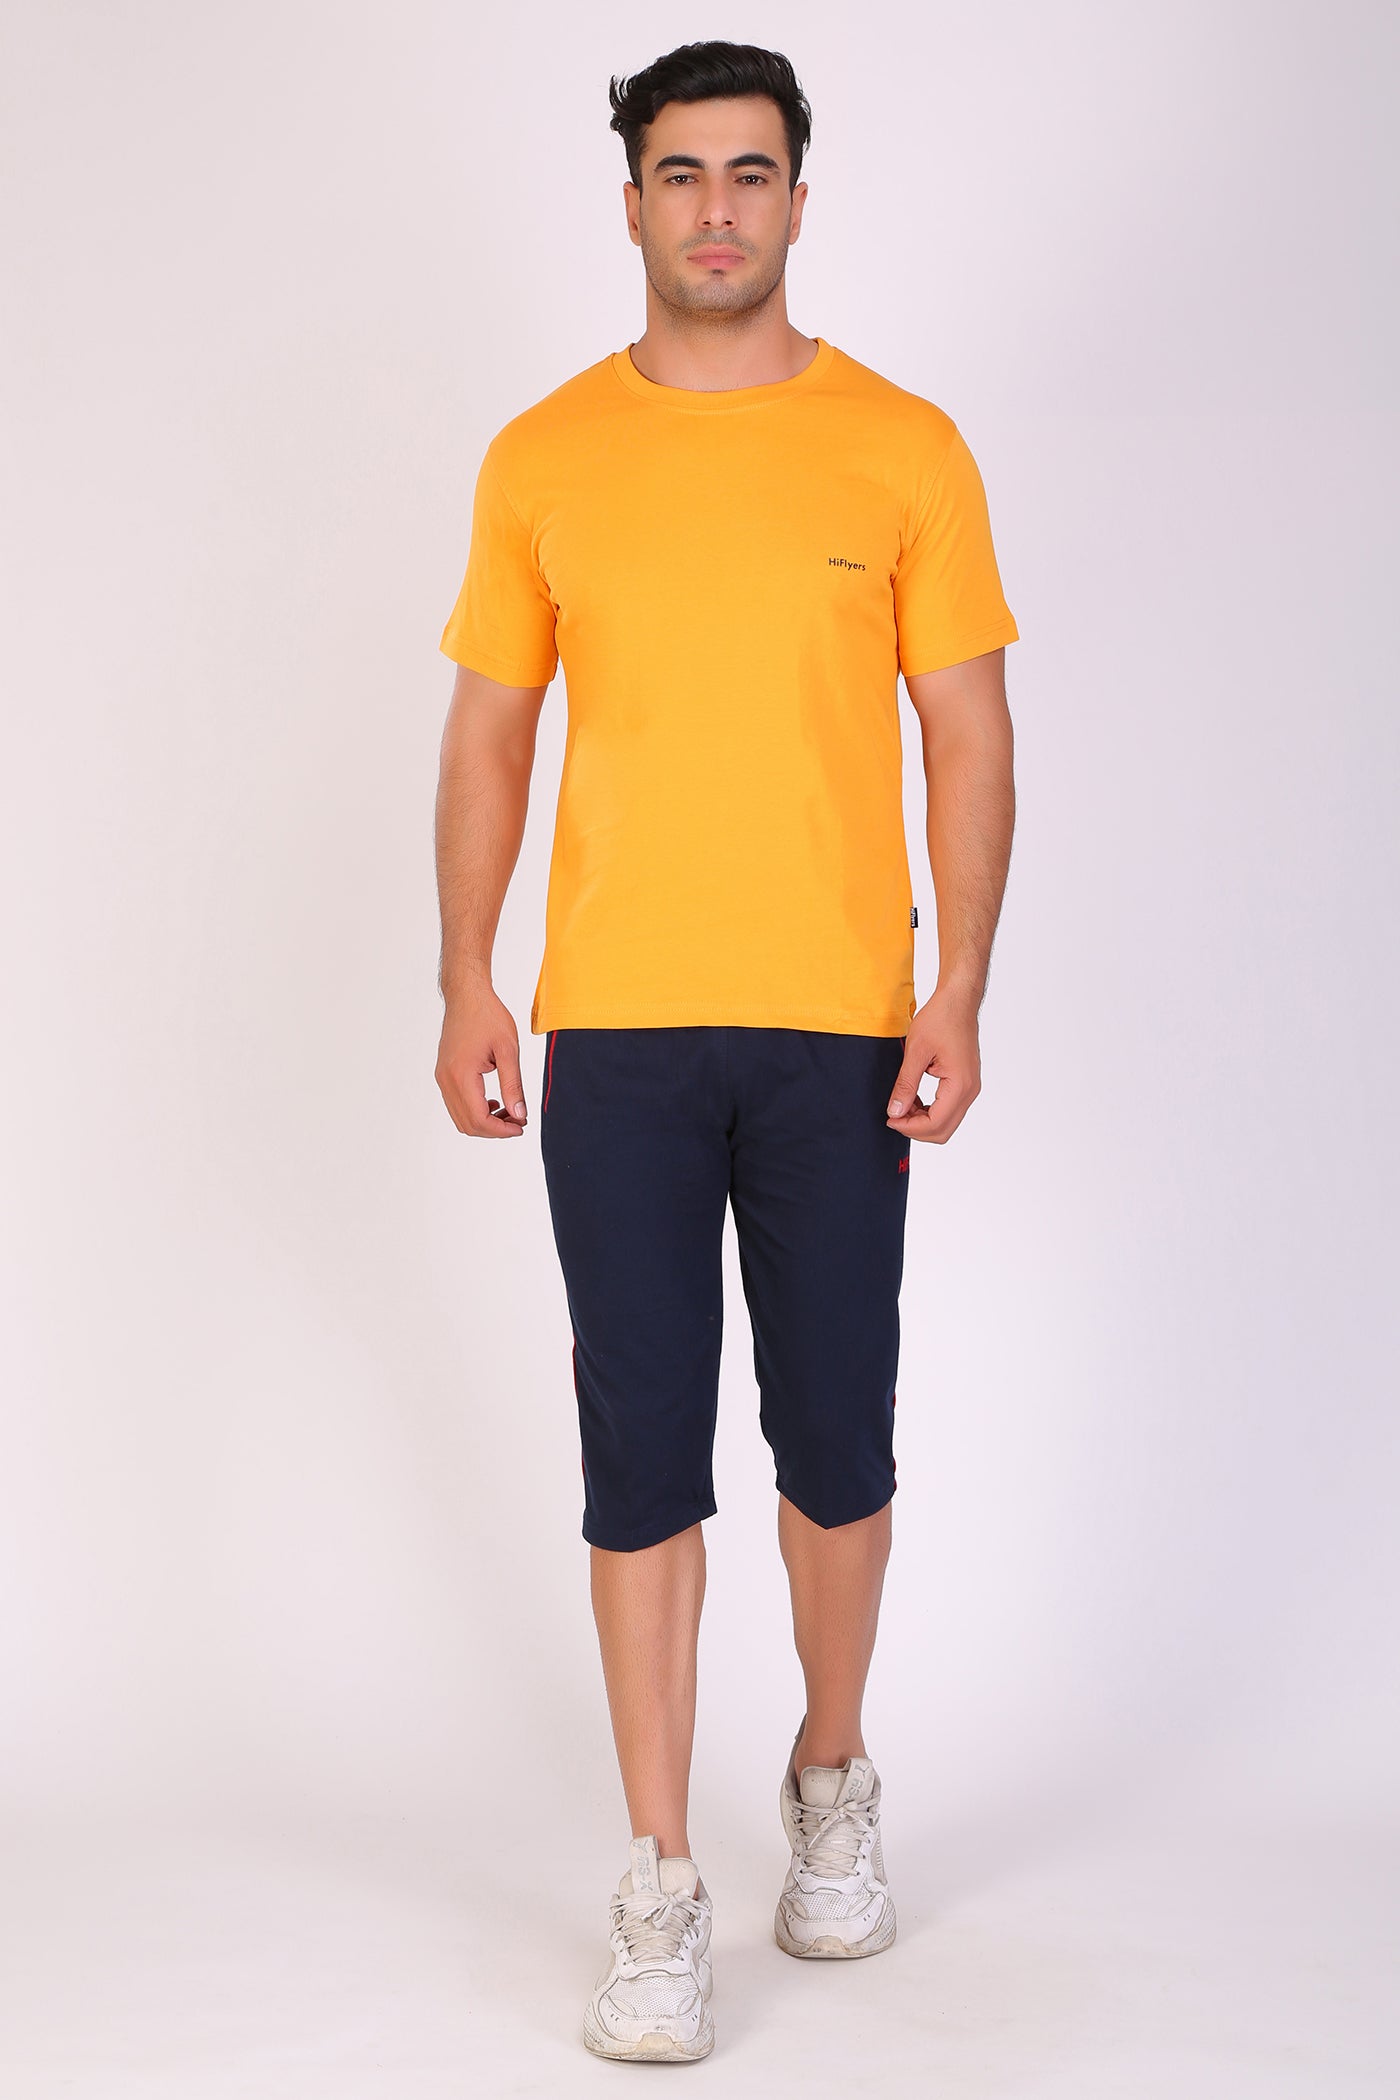 HiFlyers Men Slim Fit Solid Premium Rn Tshirts Gold